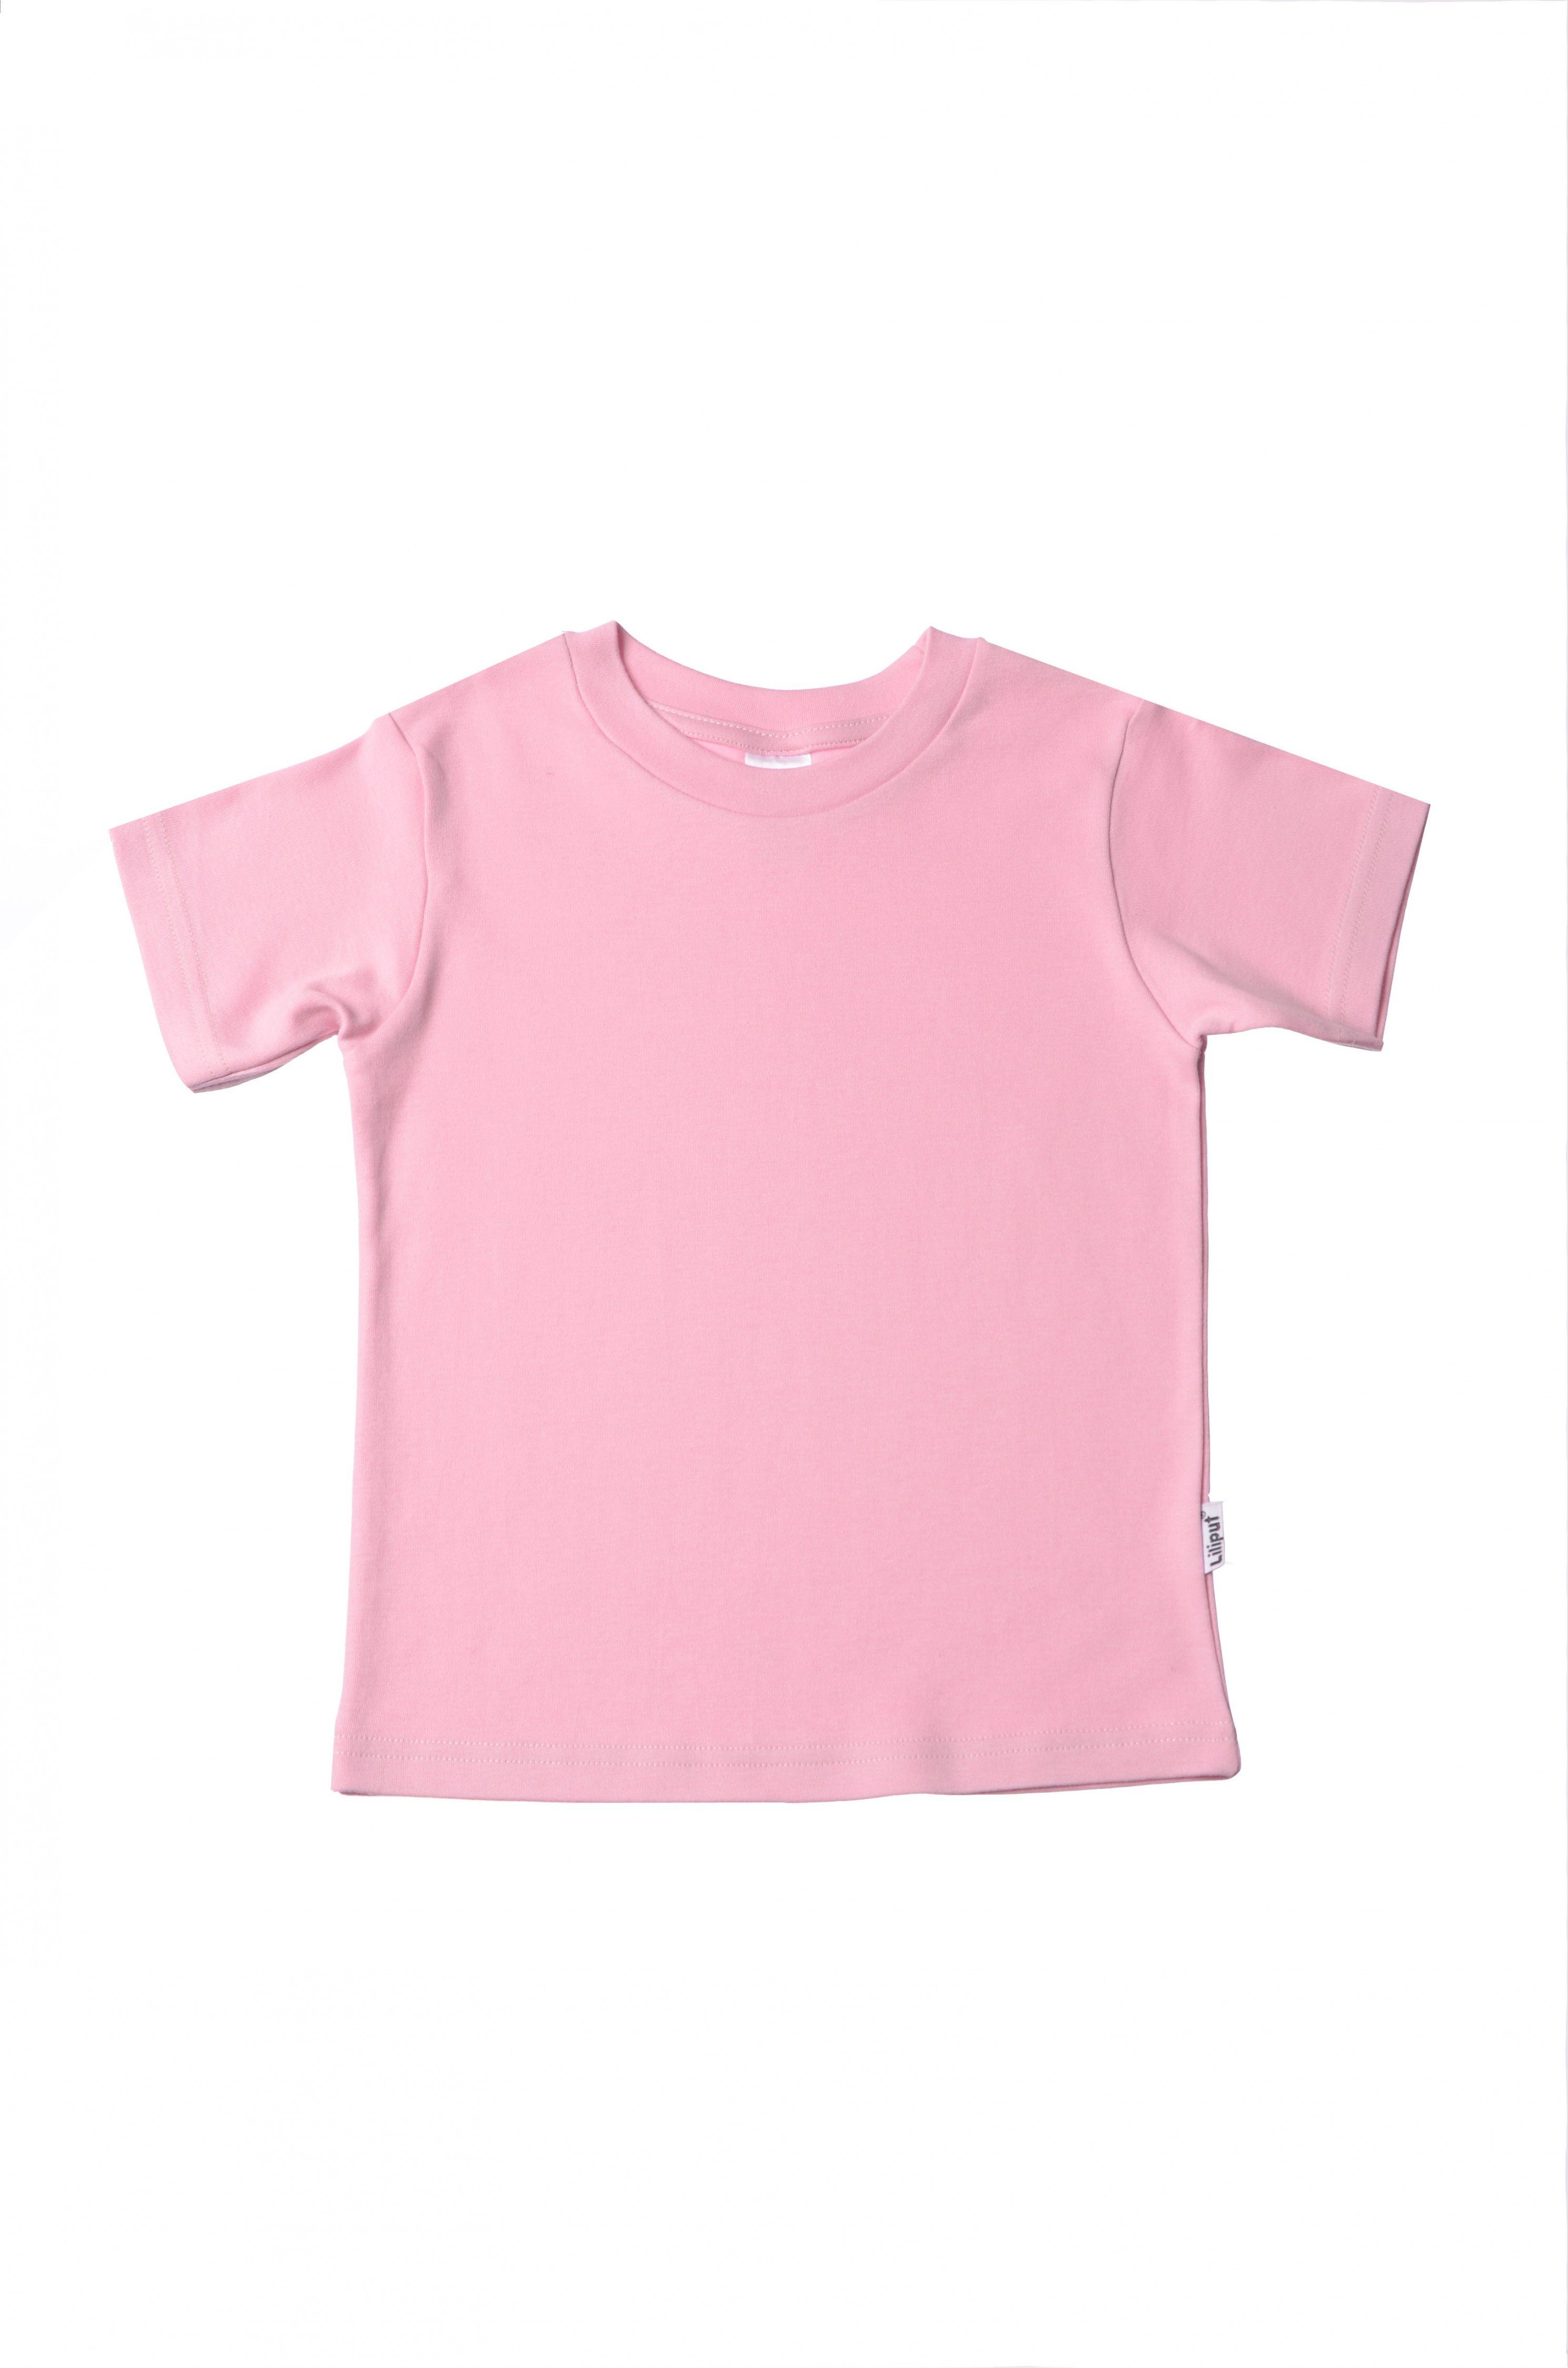 T-Shirt in Design Liliput rosa niedlichem